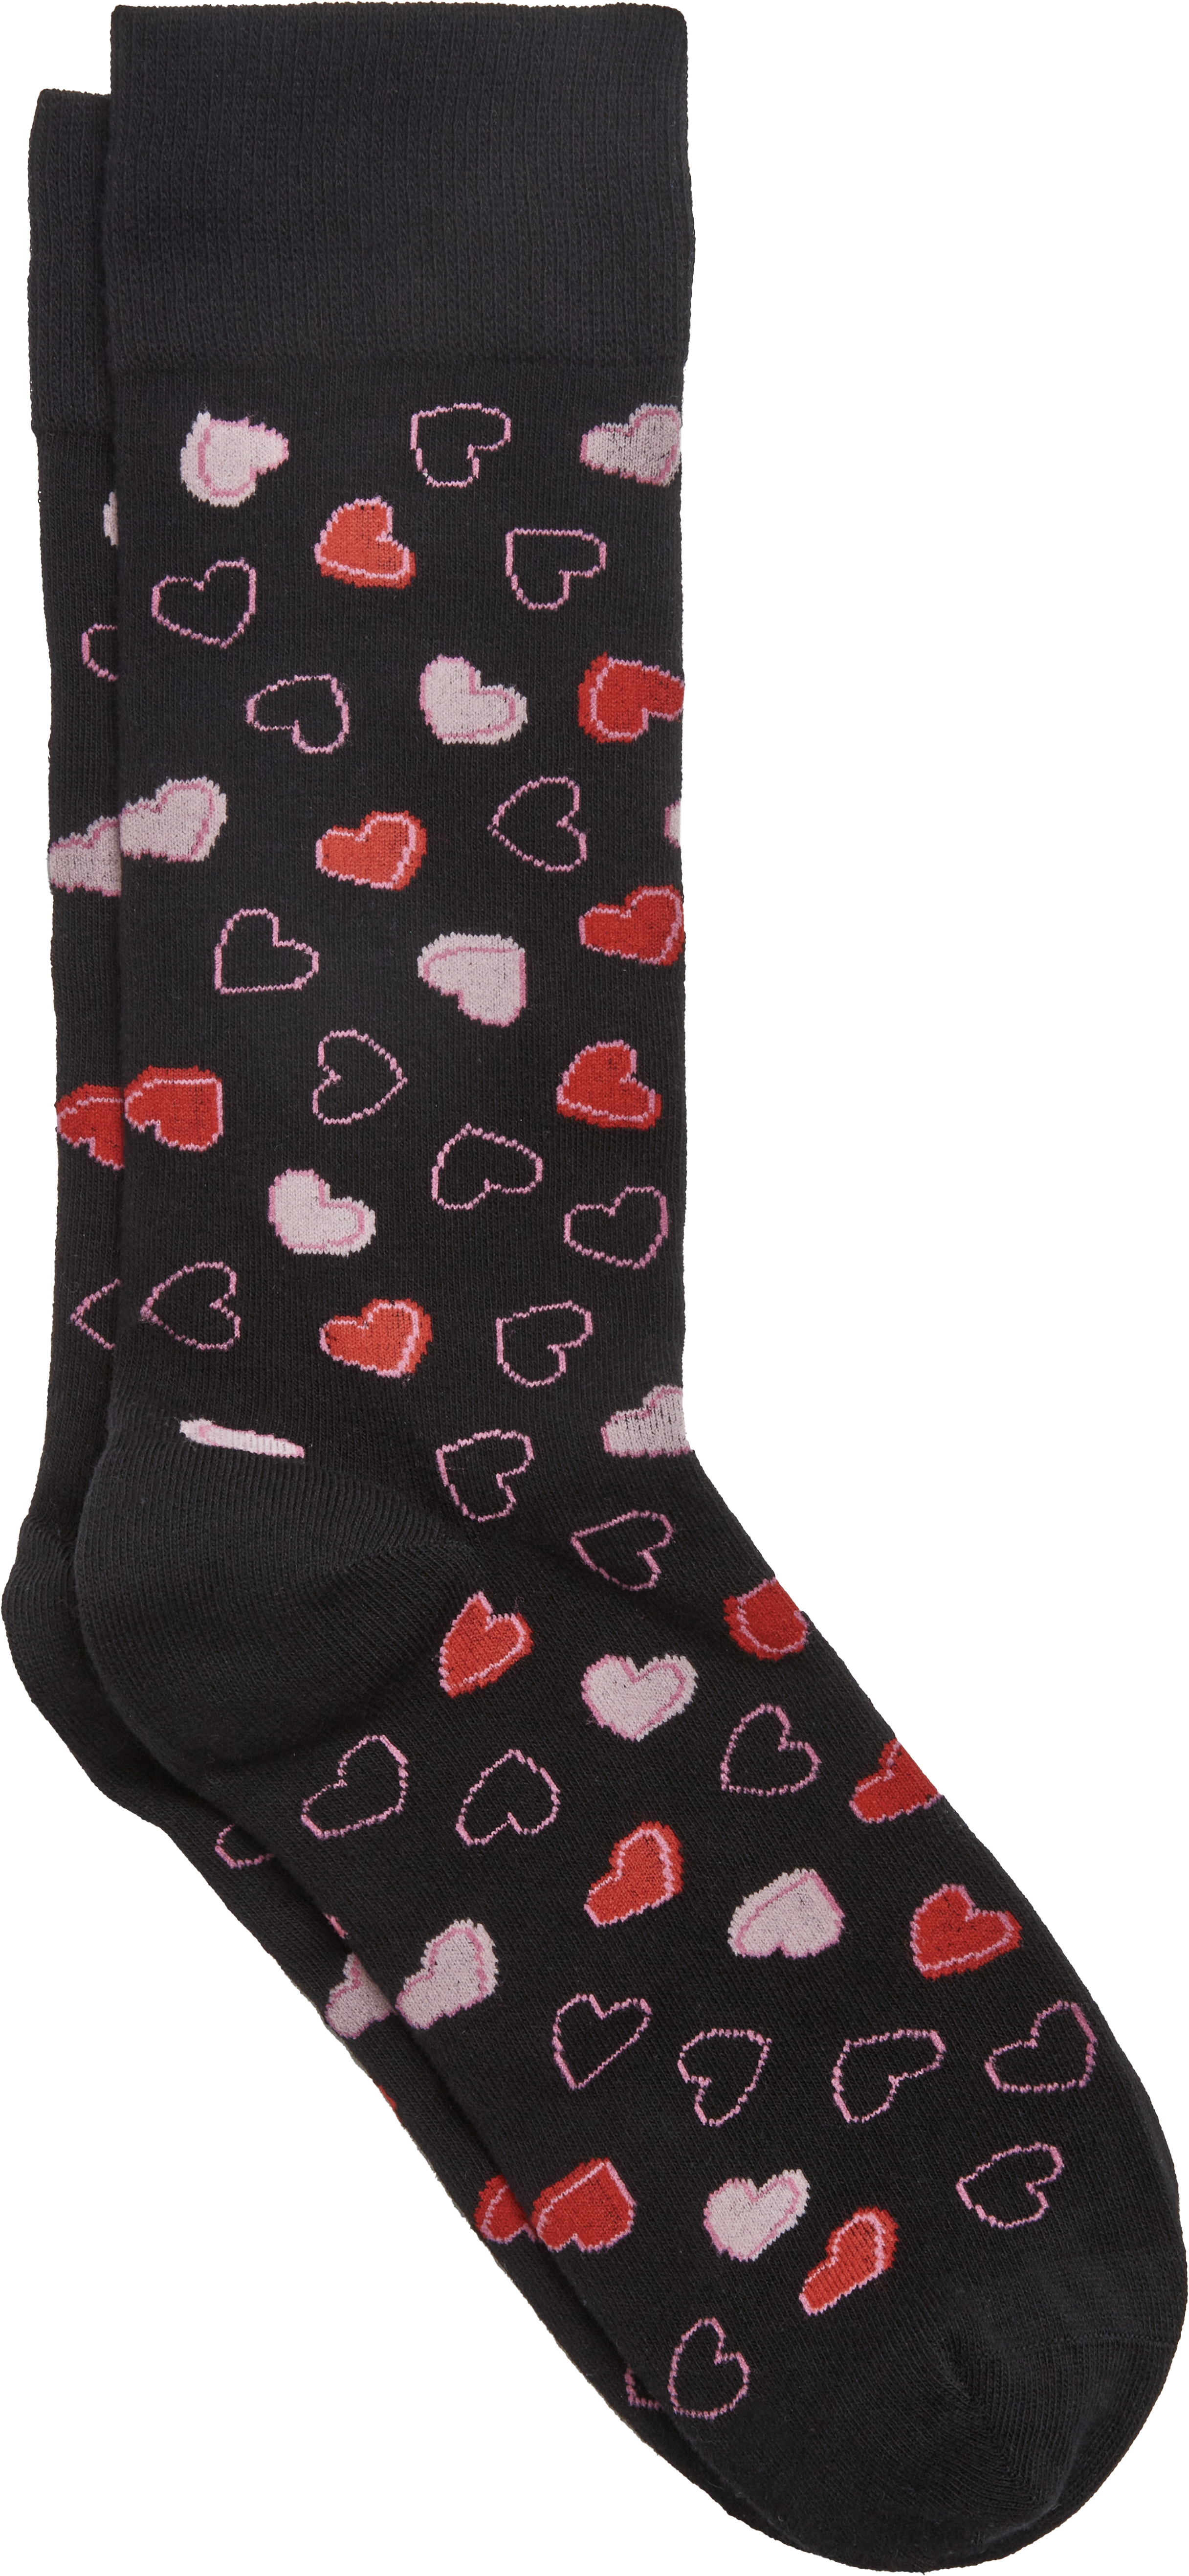 1-Pair Hearts Socks